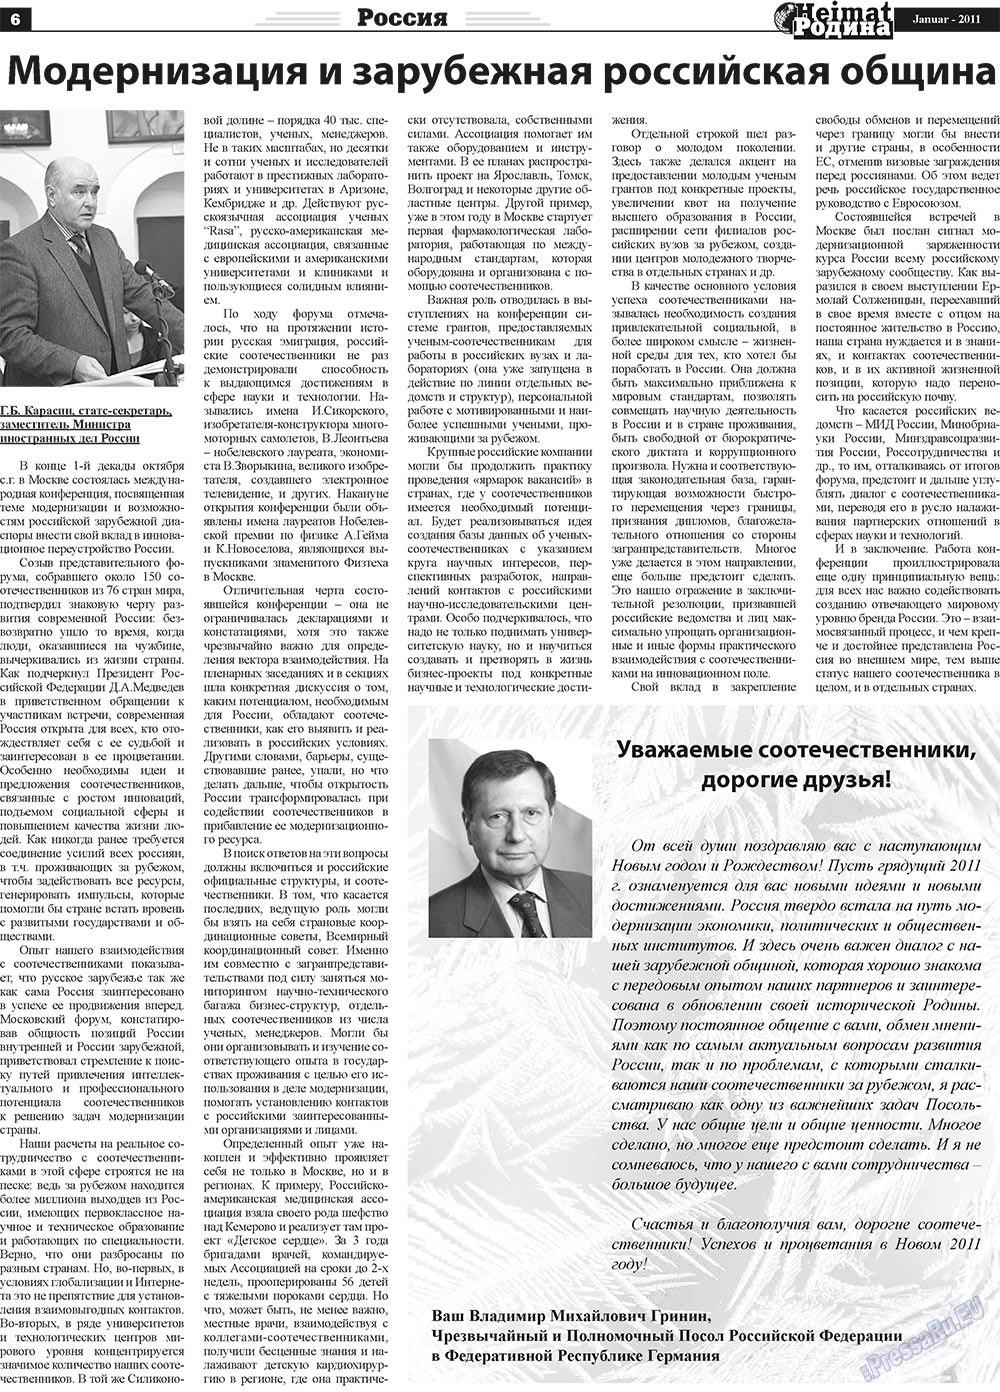 Heimat-Родина, газета. 2011 №1 стр.6